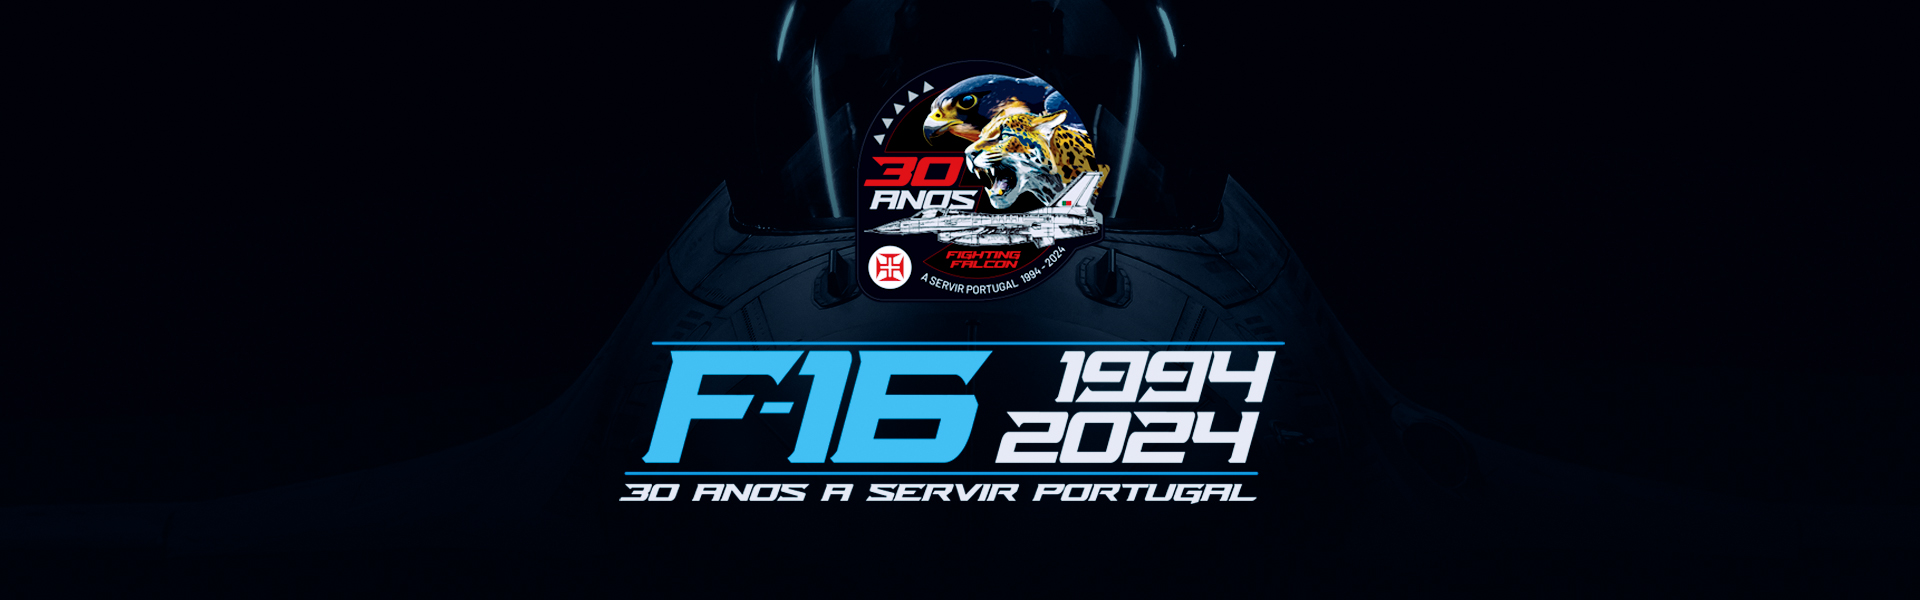 Exposio dos 30 anos do F-16